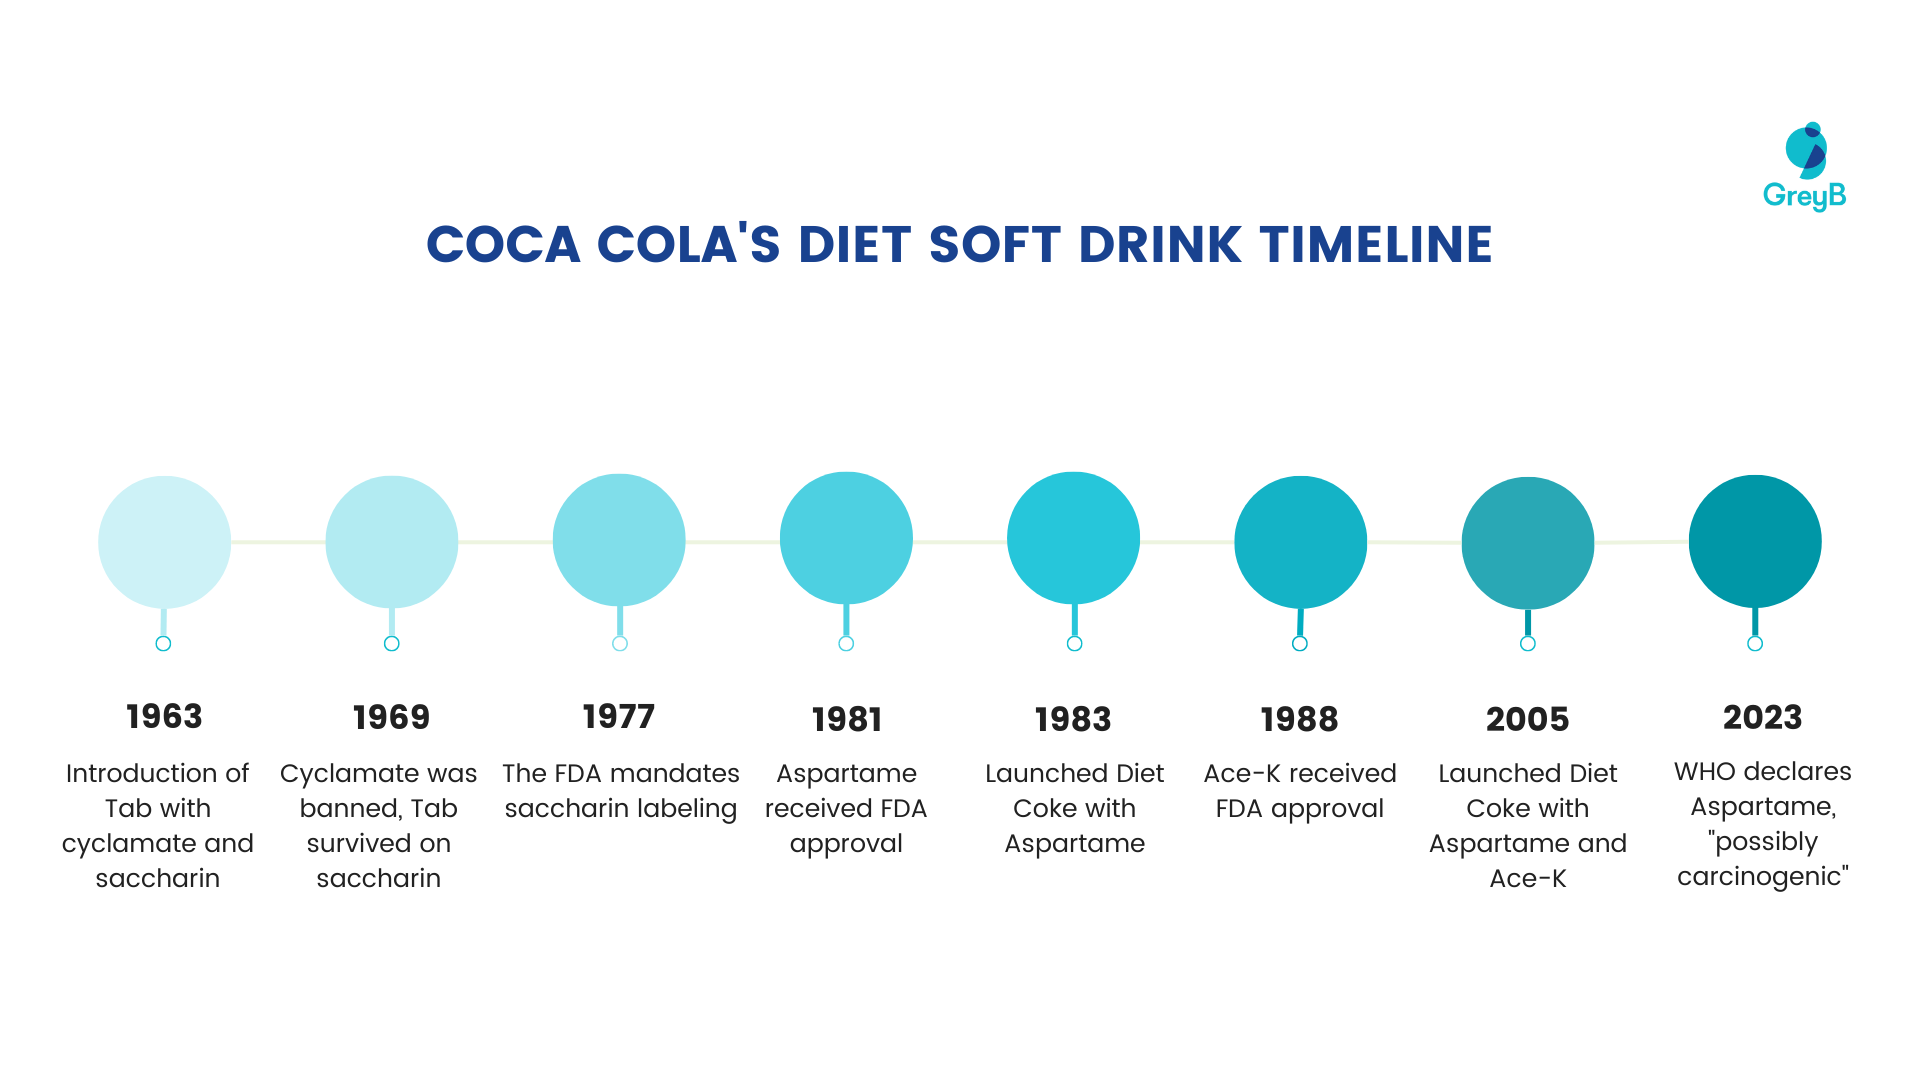 COCA COLA'S DIET SOFT DRINK TIMELINE